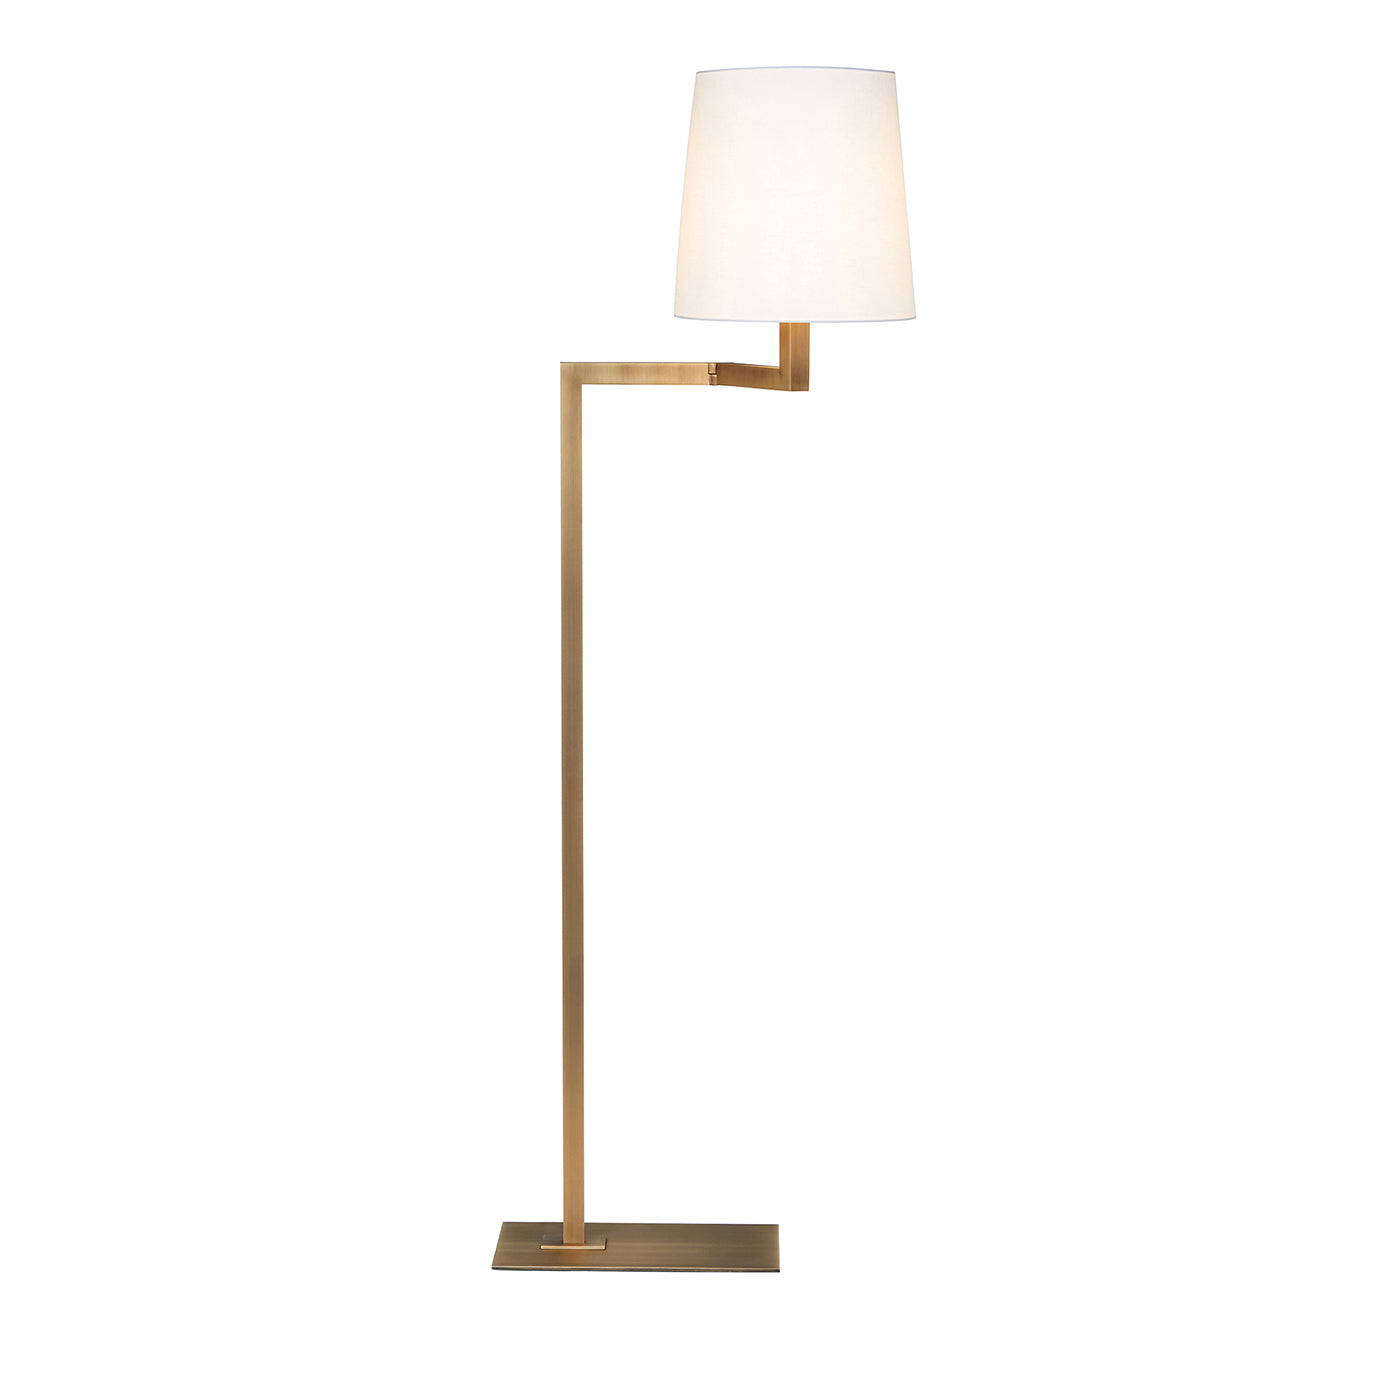 Tonda Angled Bronzed Floor Lamp with White Cotton Shade - Main view